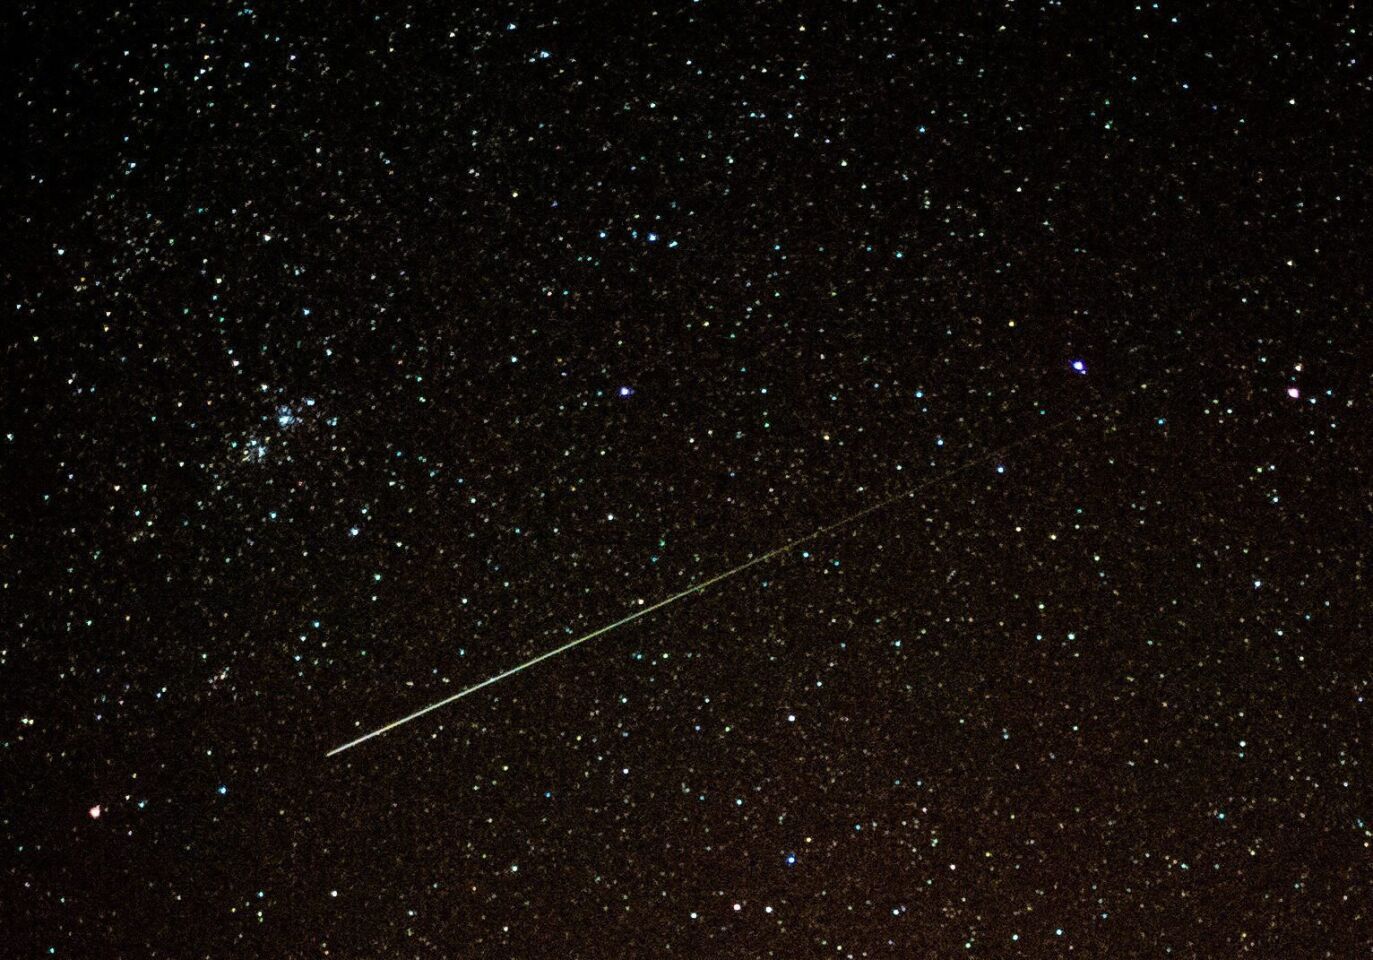 A shooting star illuminates the night sky near Sieversdorf, Germany.